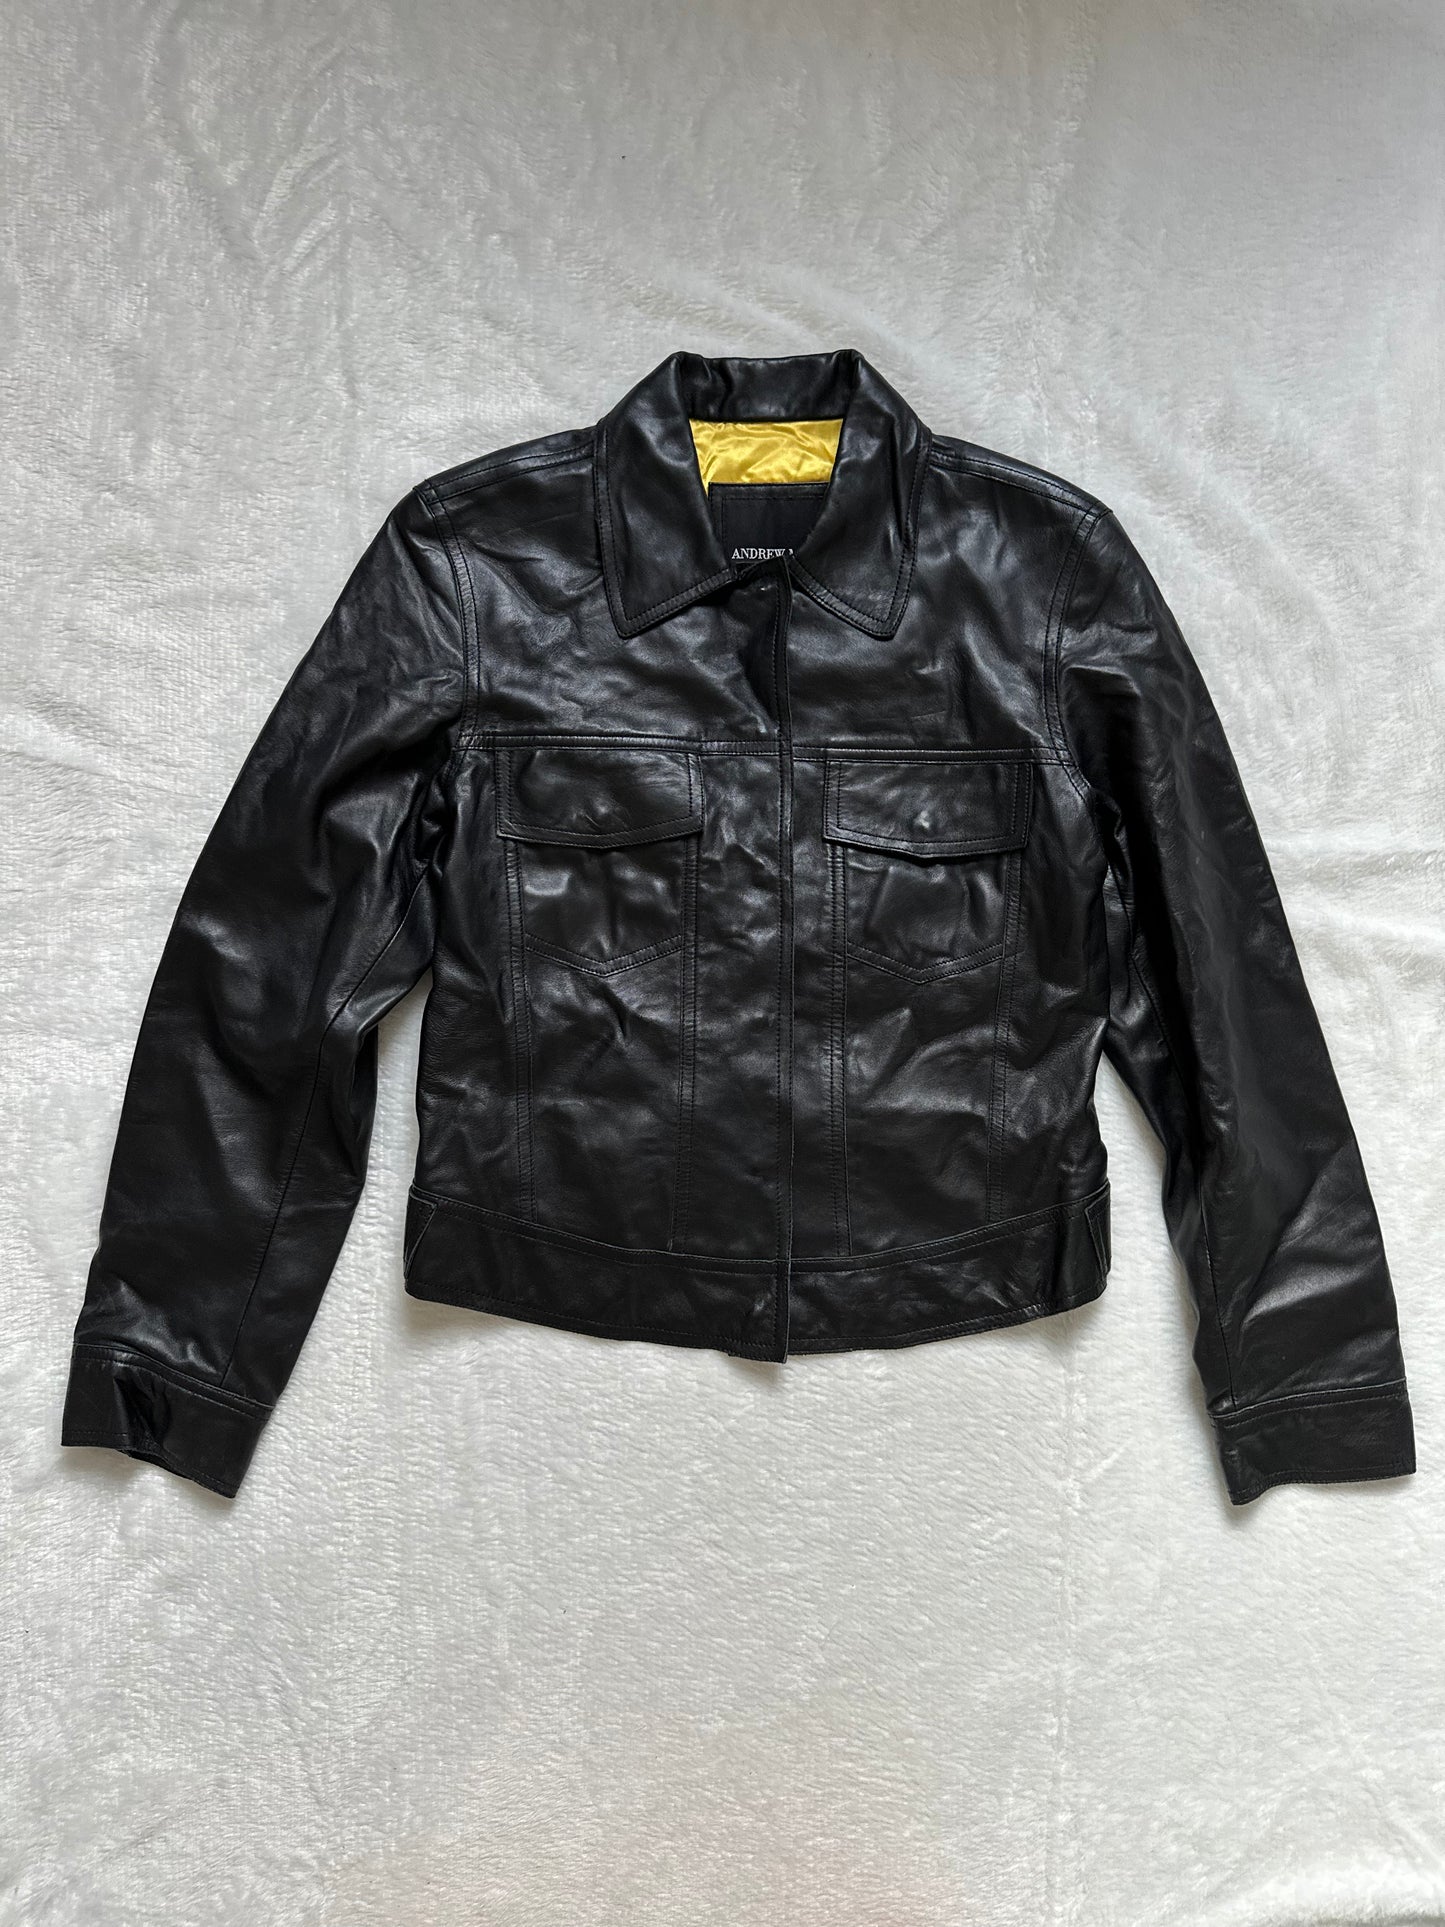 Andrew Marc Leather Jacket